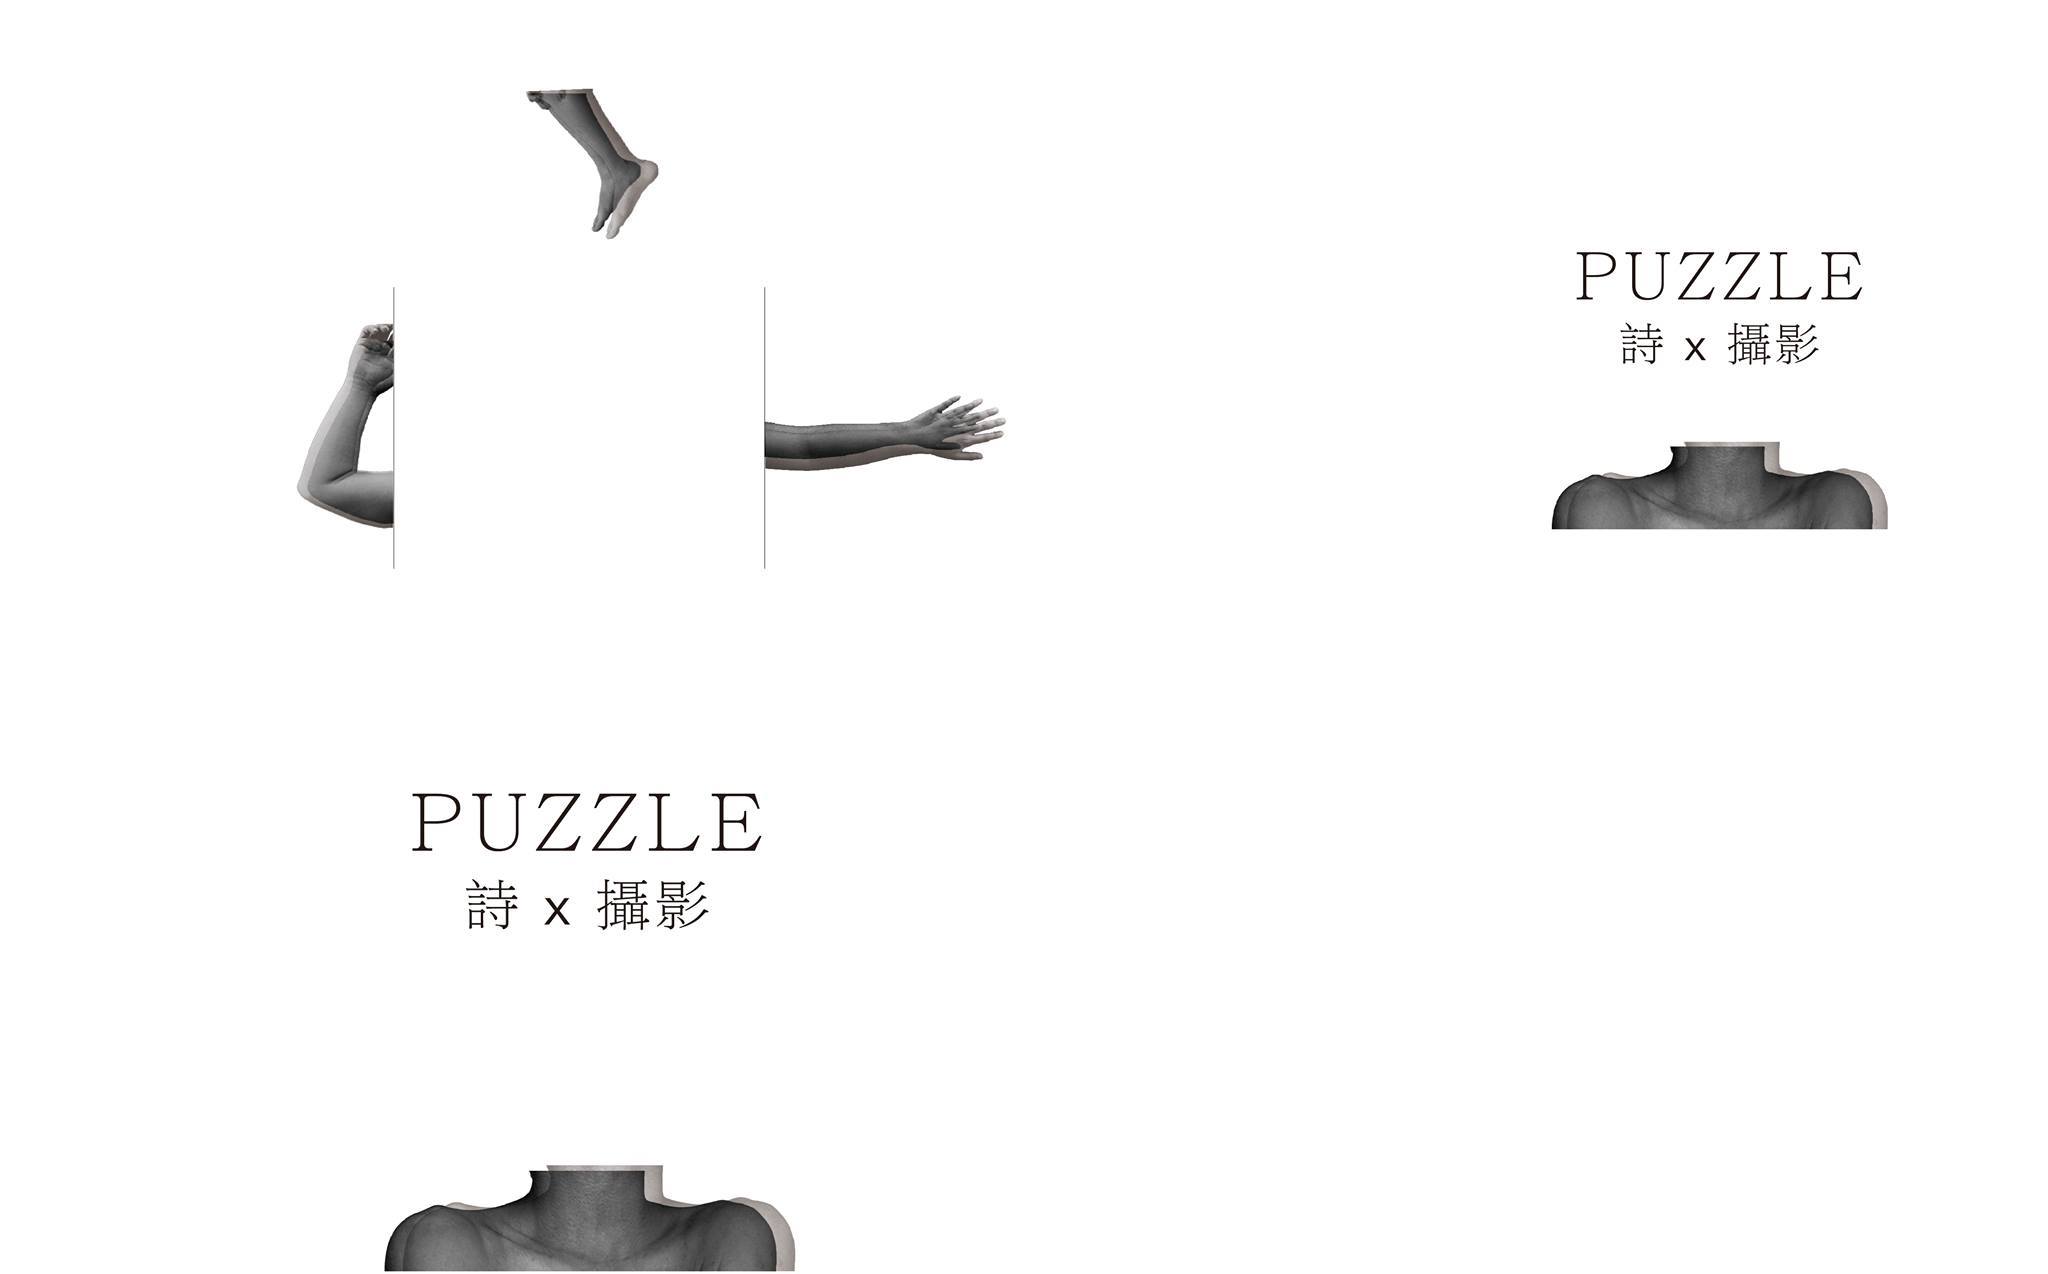 〈Puzzle 詩 x 攝影 文學展〉